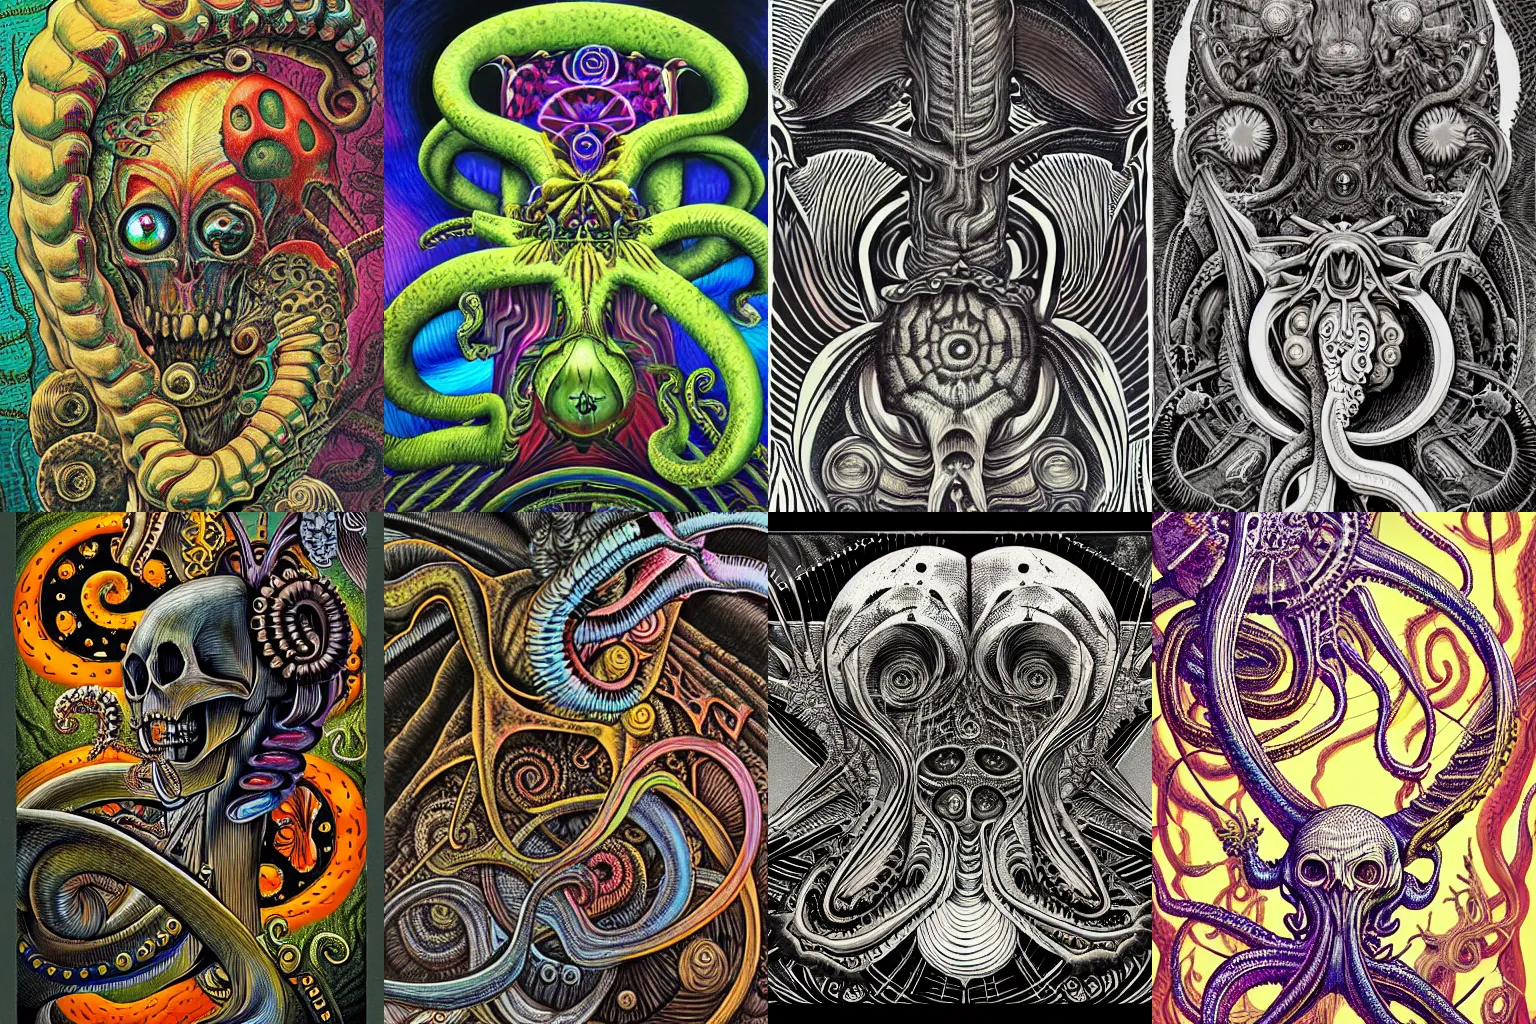 Prompt: artwork by hp lovecraft, h. r. giger, aaron horkey, amanda sage, alex grey, frank stella and akira toriyama. butterflies, vibrant, dmt, skull, tentacle, octopus, mushroom, fungi, bio - mechanical, steampunk, horror, design. artstation, trending, uhd, 4 k, detailed, award - winning.